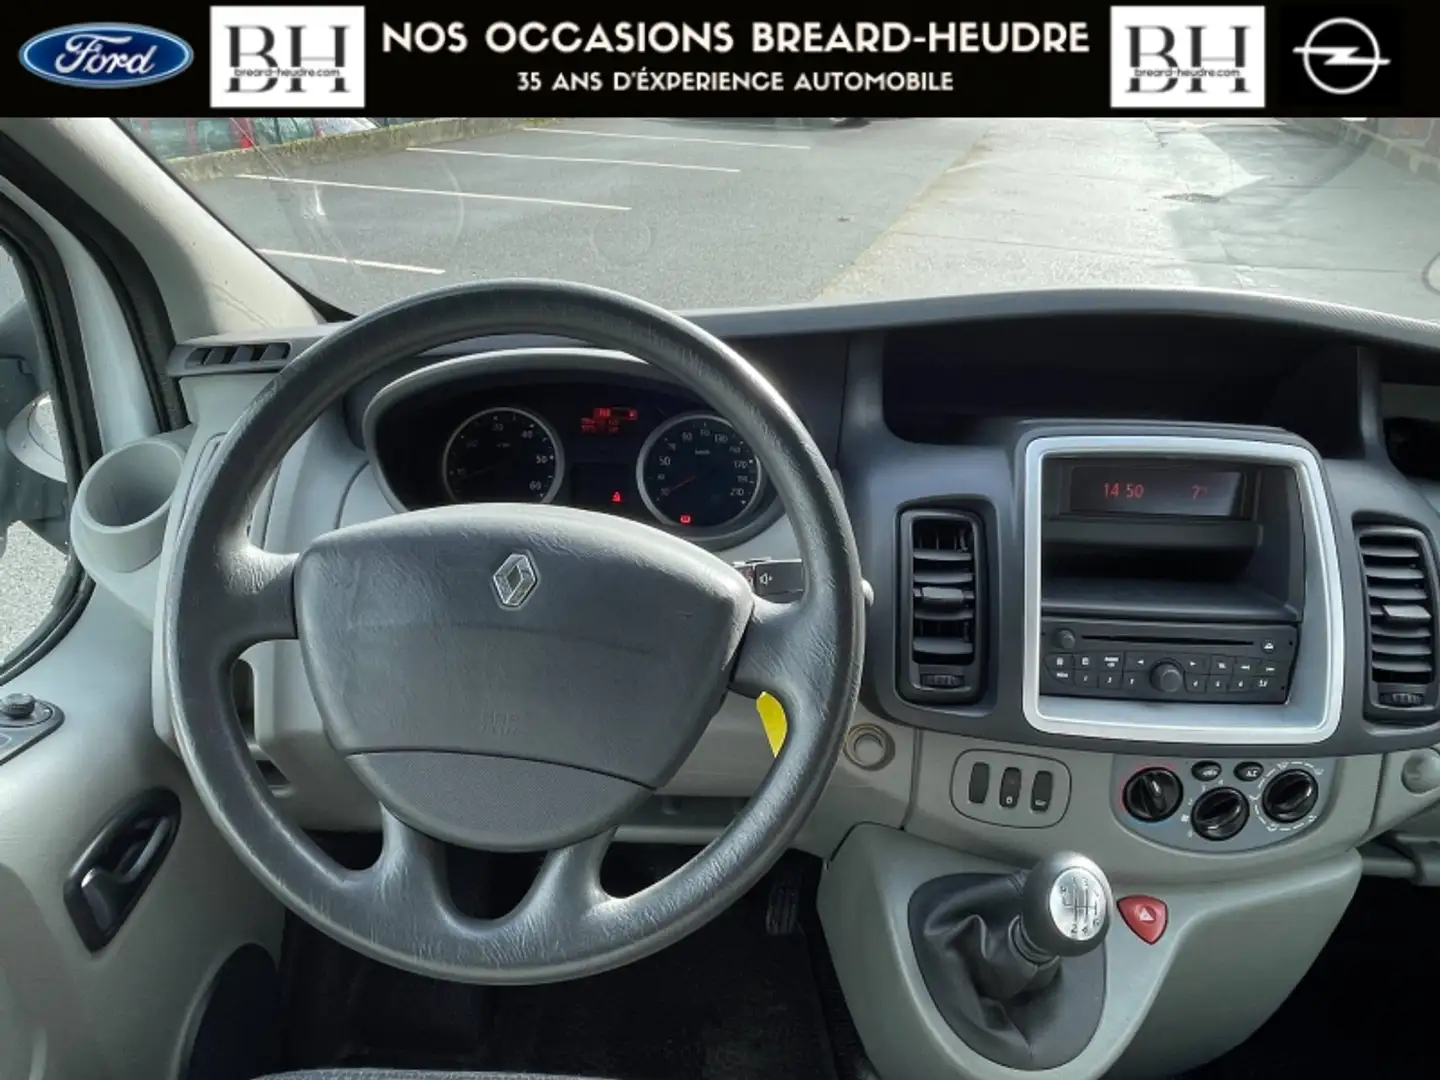 Renault Trafic 2.0 dCi 90ch Authentique - 2